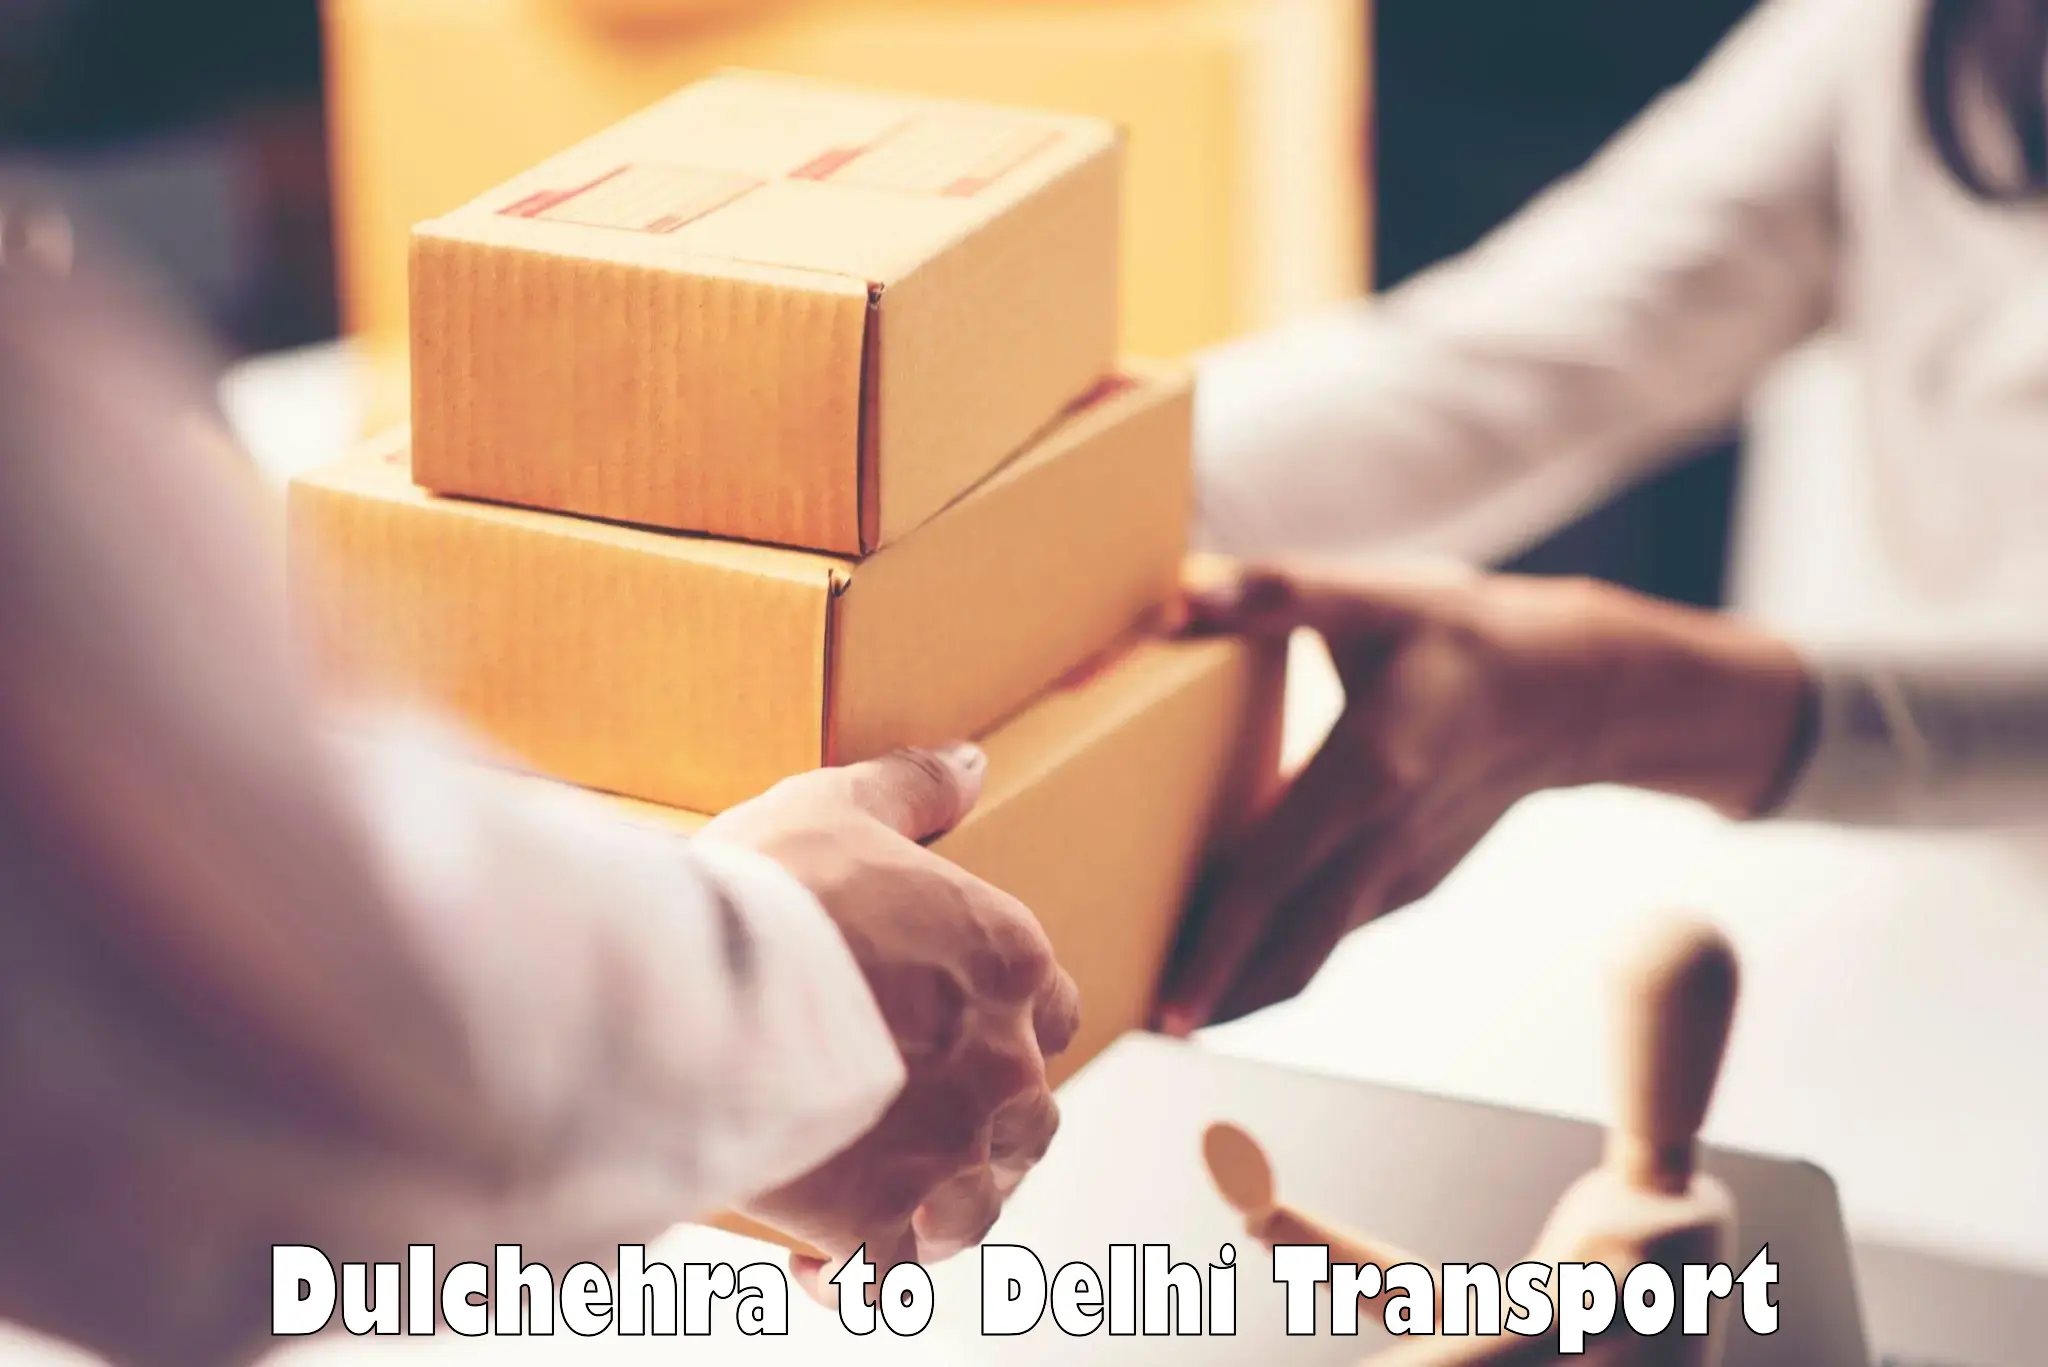 Parcel transport services Dulchehra to NCR